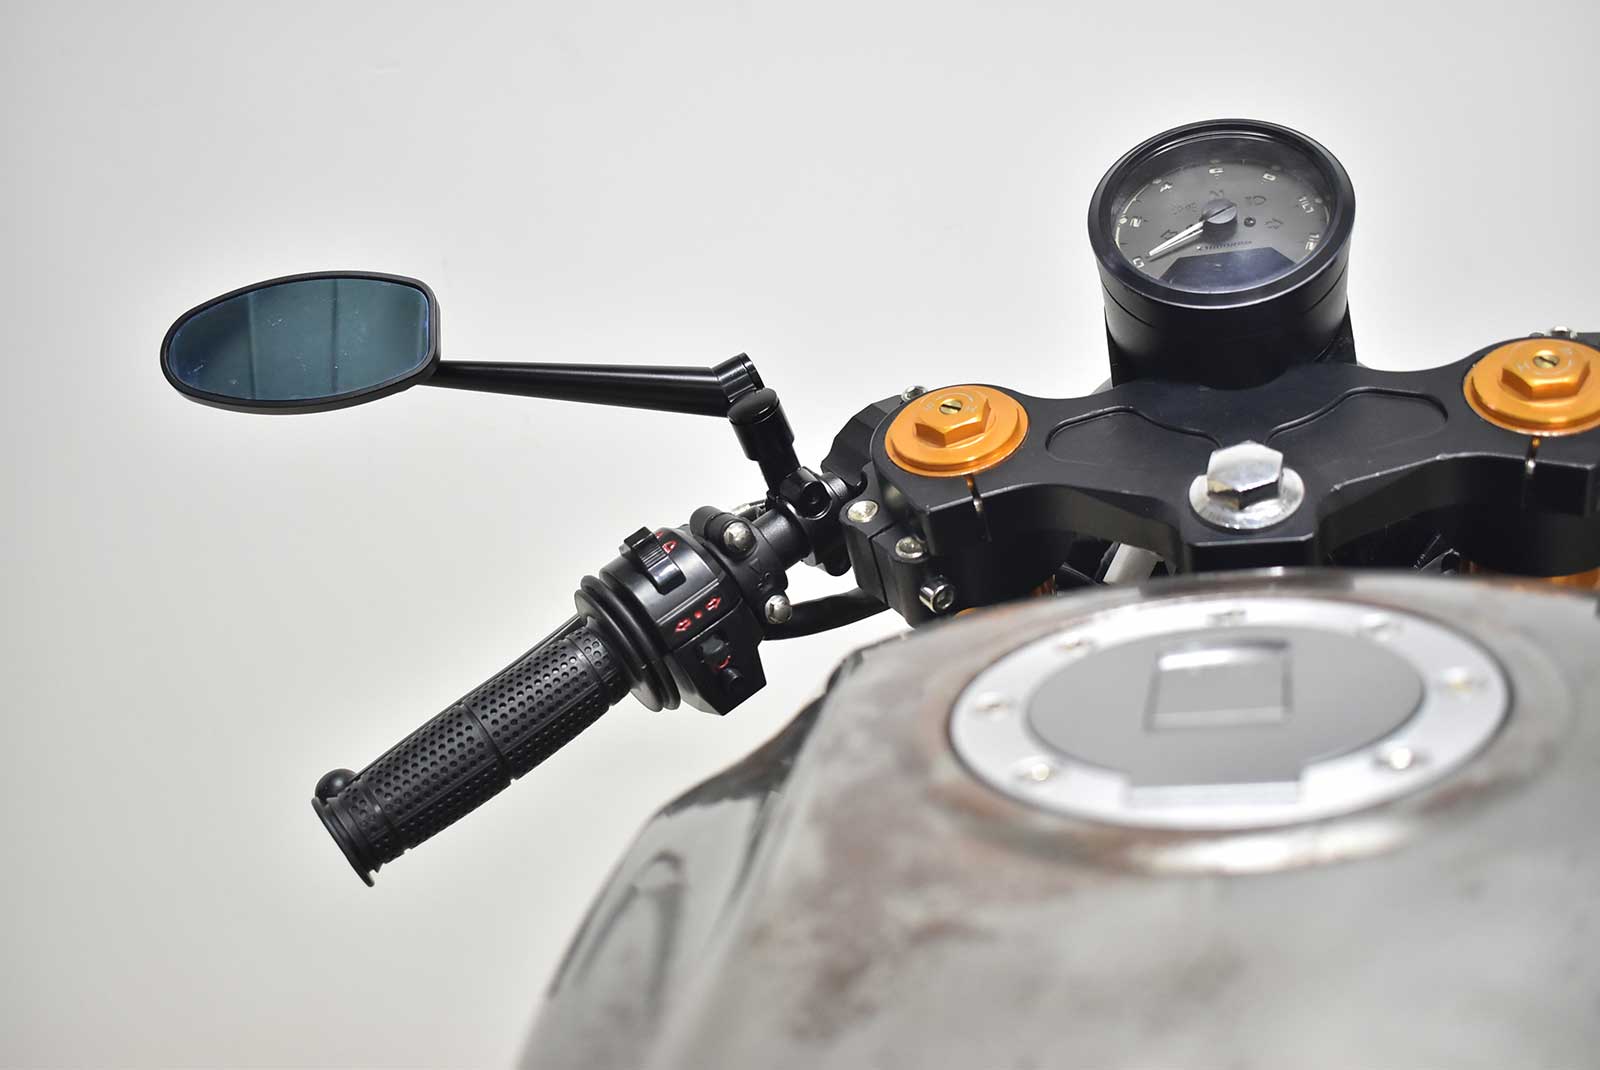 8mm Anti-Colockwise Black Motorcycle Mirror Mount Holder